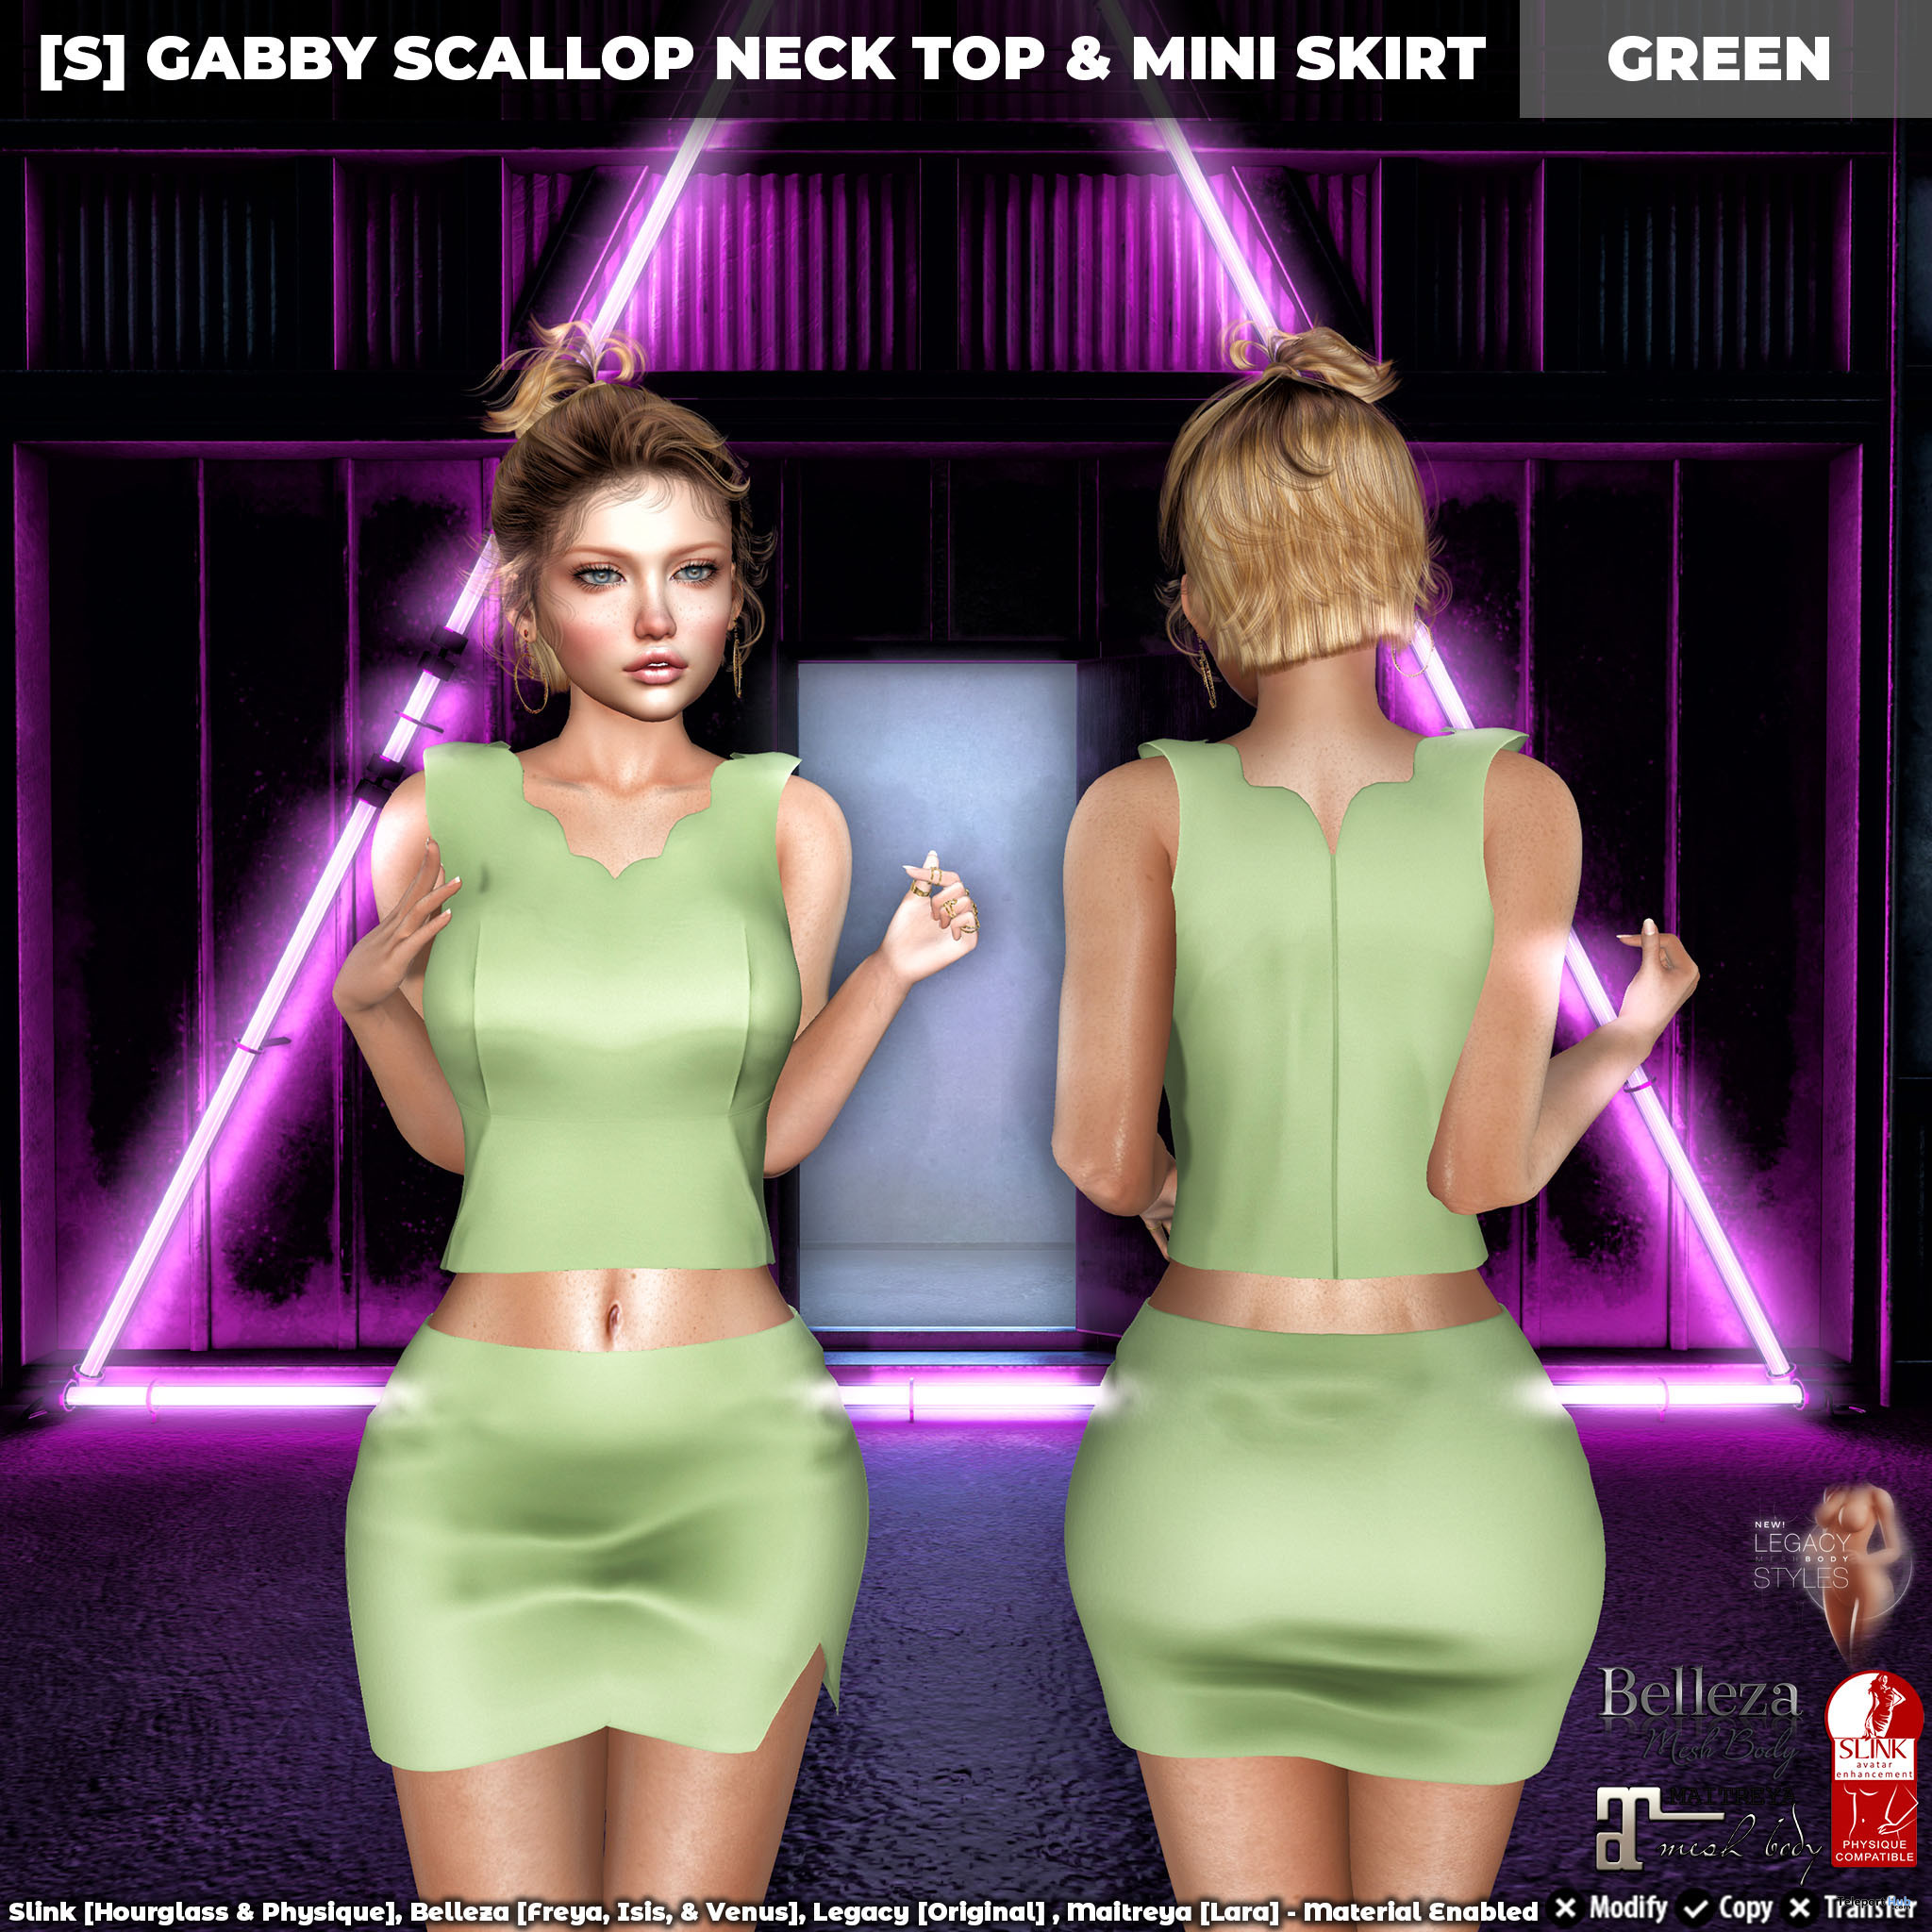 New Release: [S] Gabby Scallop Neck Top & Mini Skirt by [satus Inc] - Teleport Hub - teleporthub.com